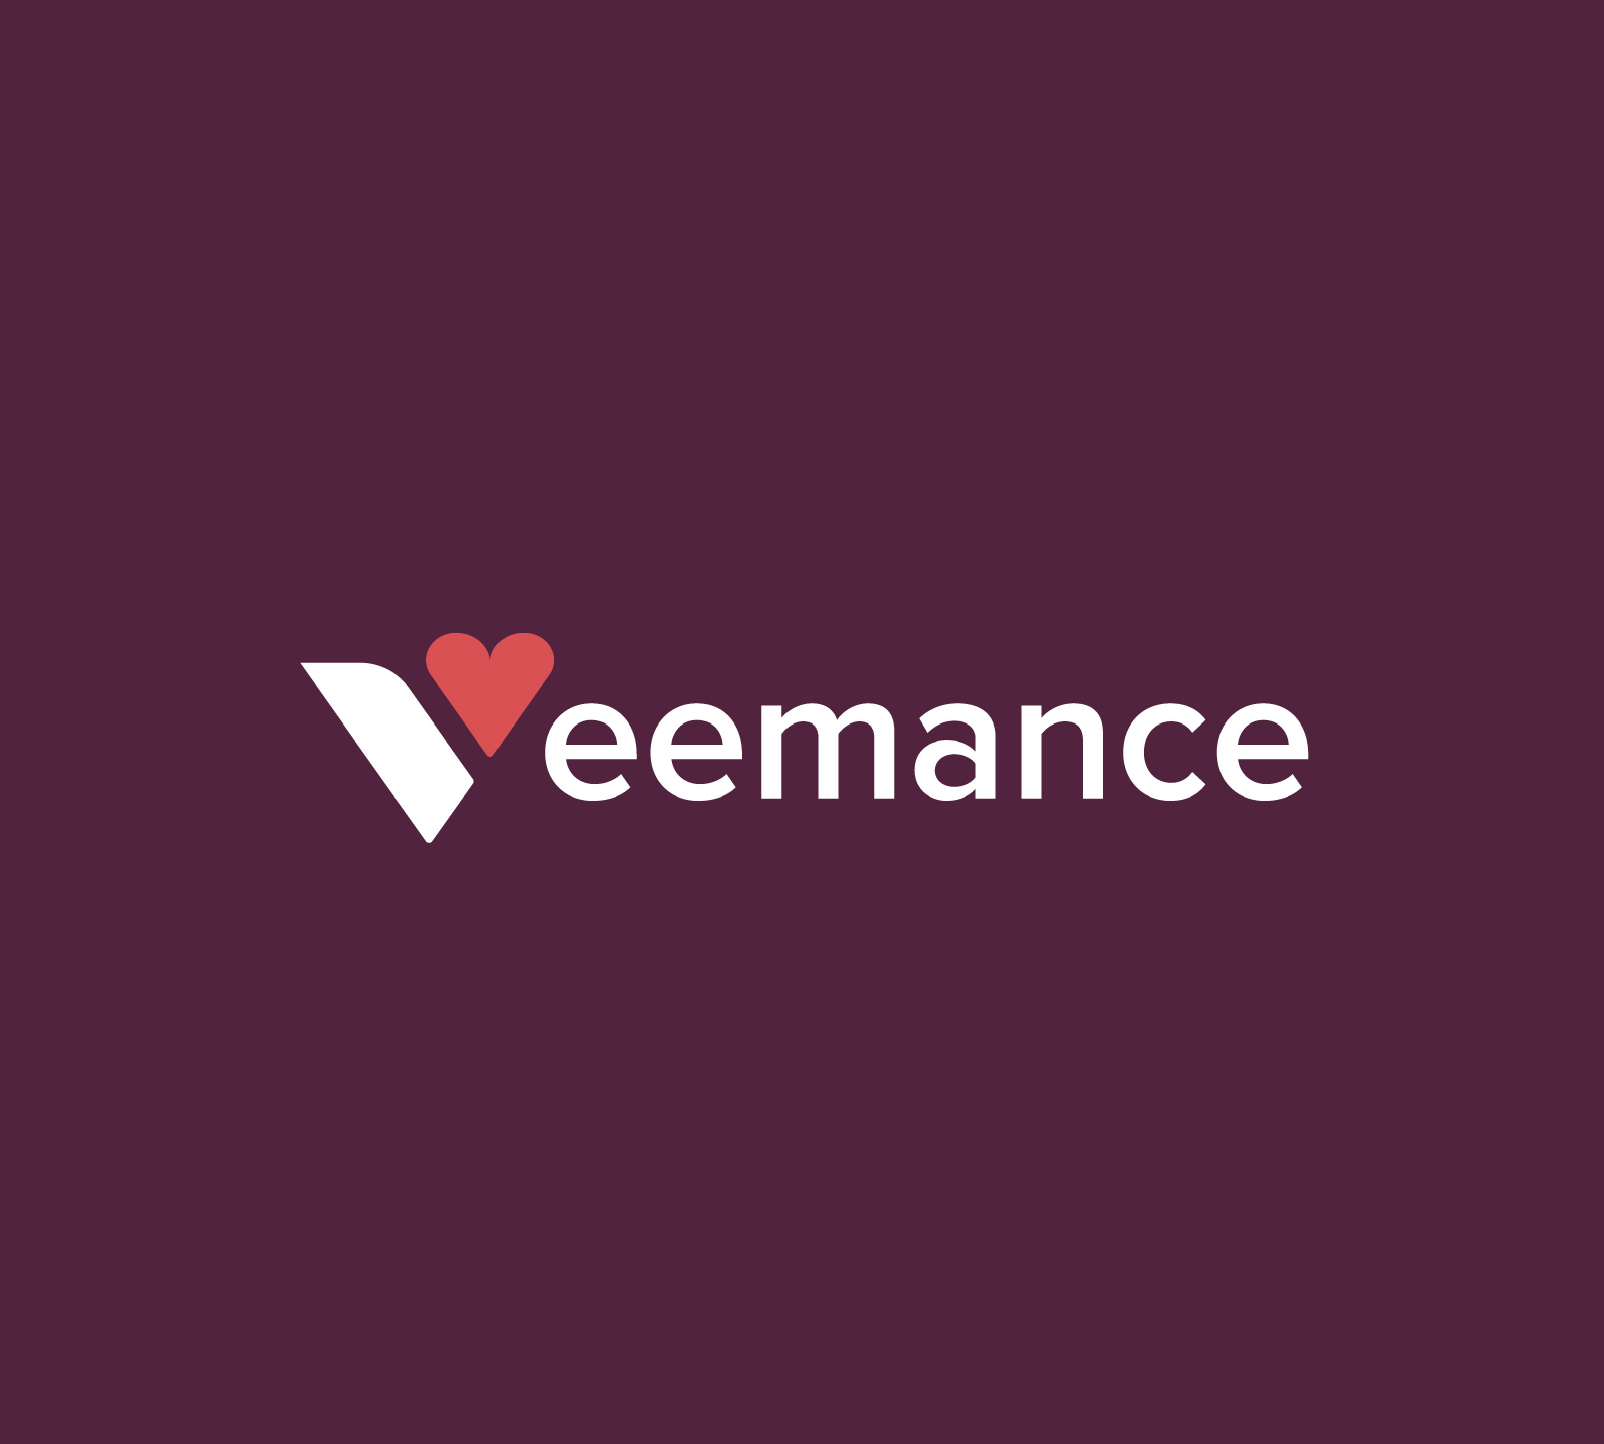 branding-and-logo-design-sydney-creative-agency-veemance-4